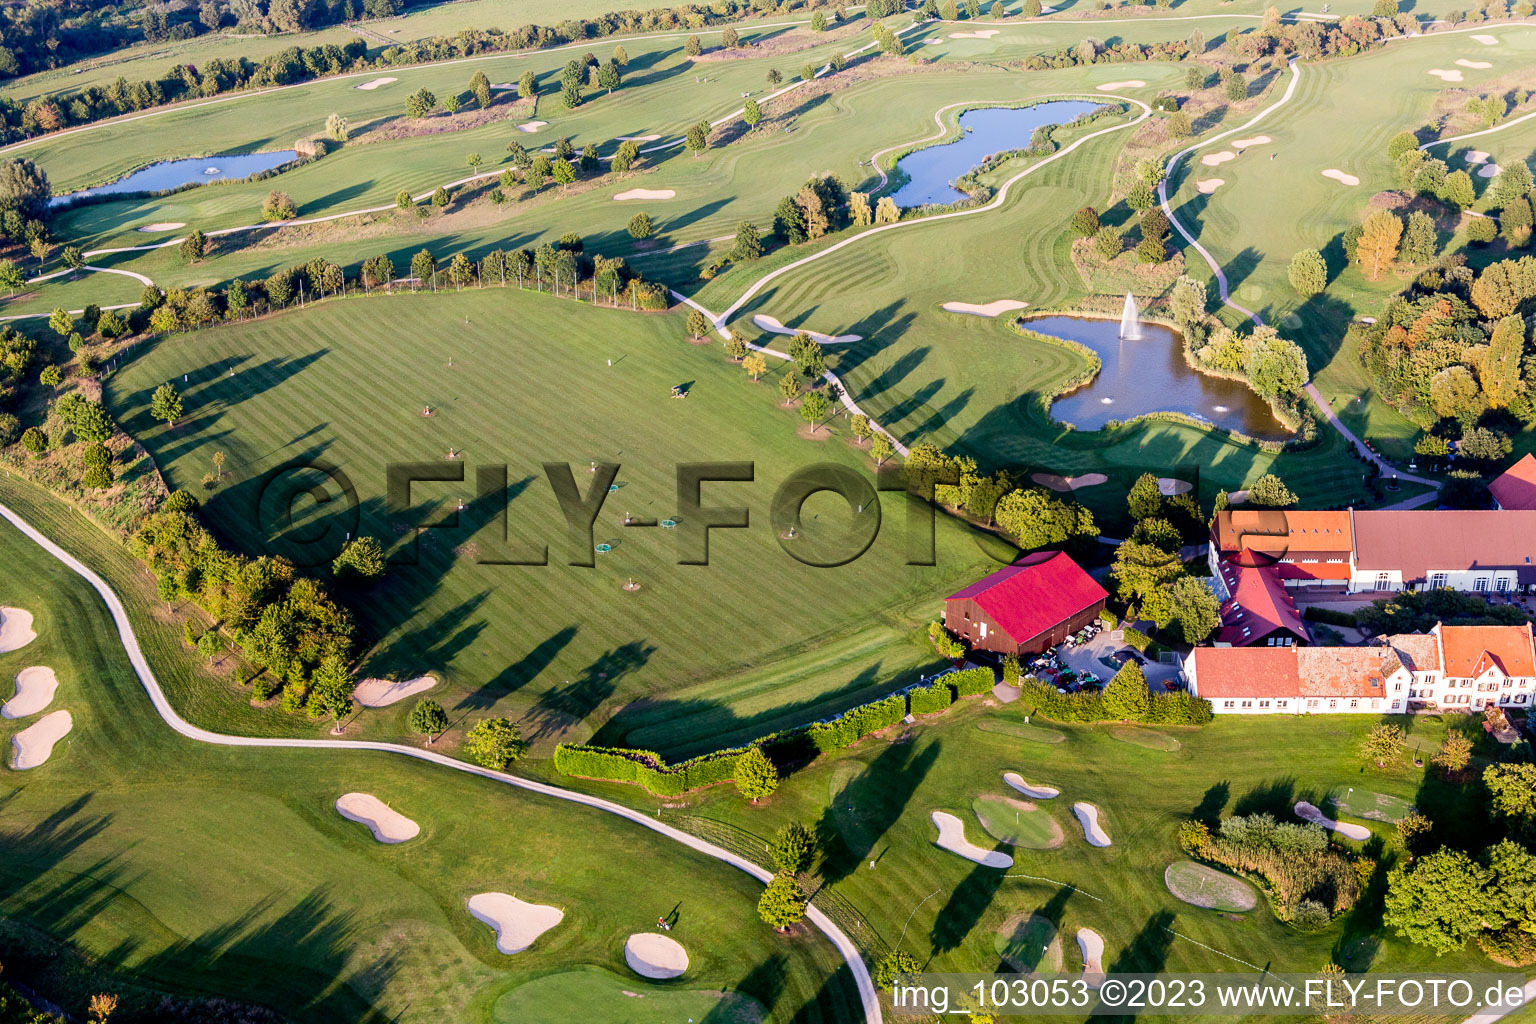 Photographie aérienne de Terrain de golf Heddesheim Gut Neuzenhof à Heddesheim dans le département Bade-Wurtemberg, Allemagne